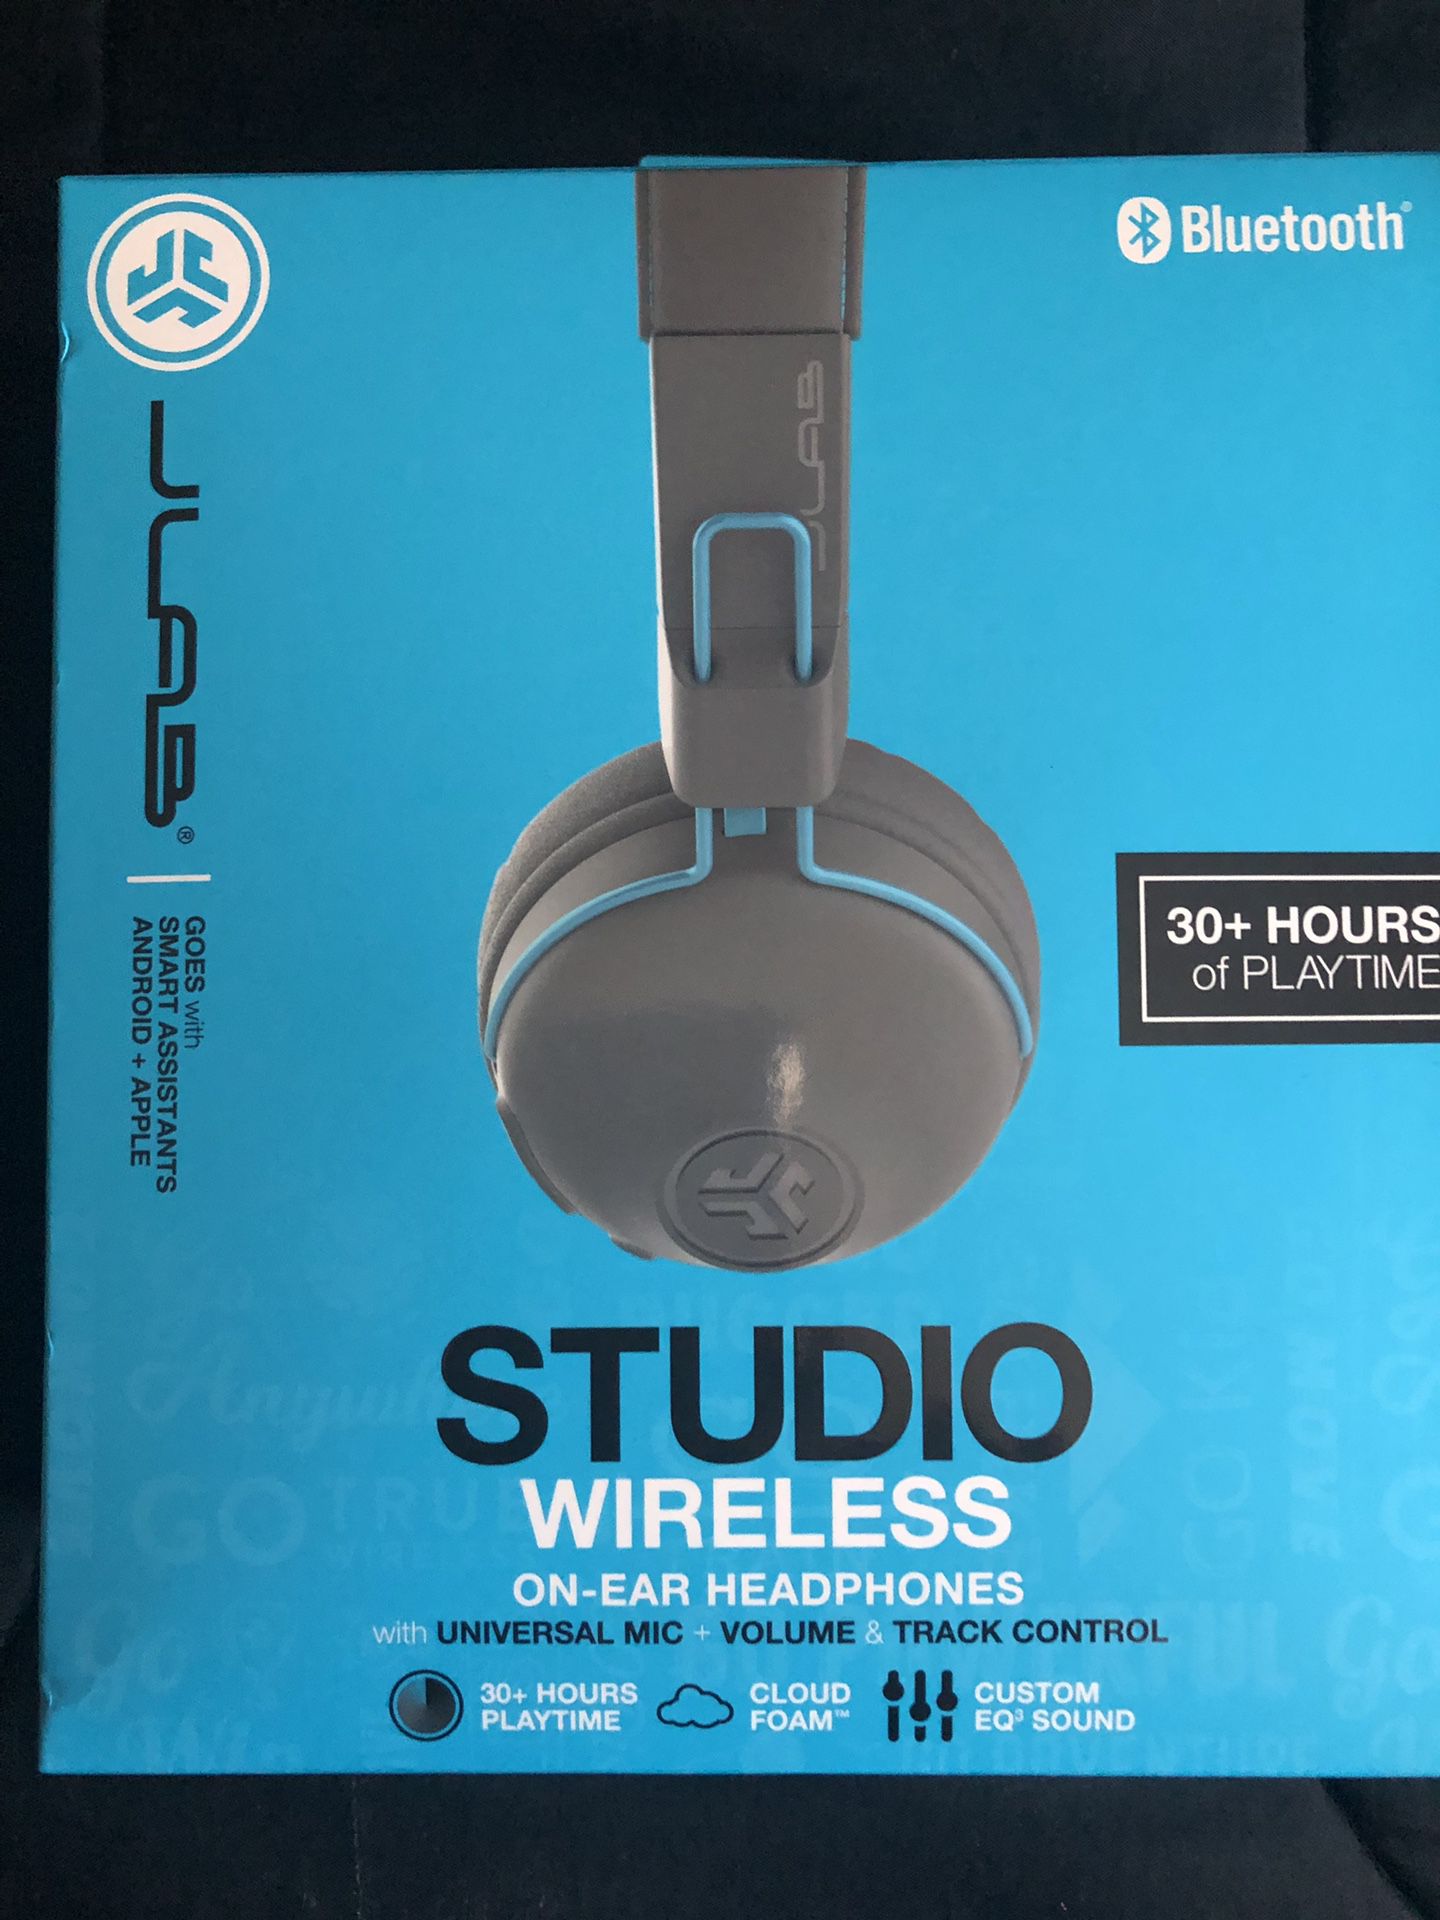 Studio wireless headphones JLab